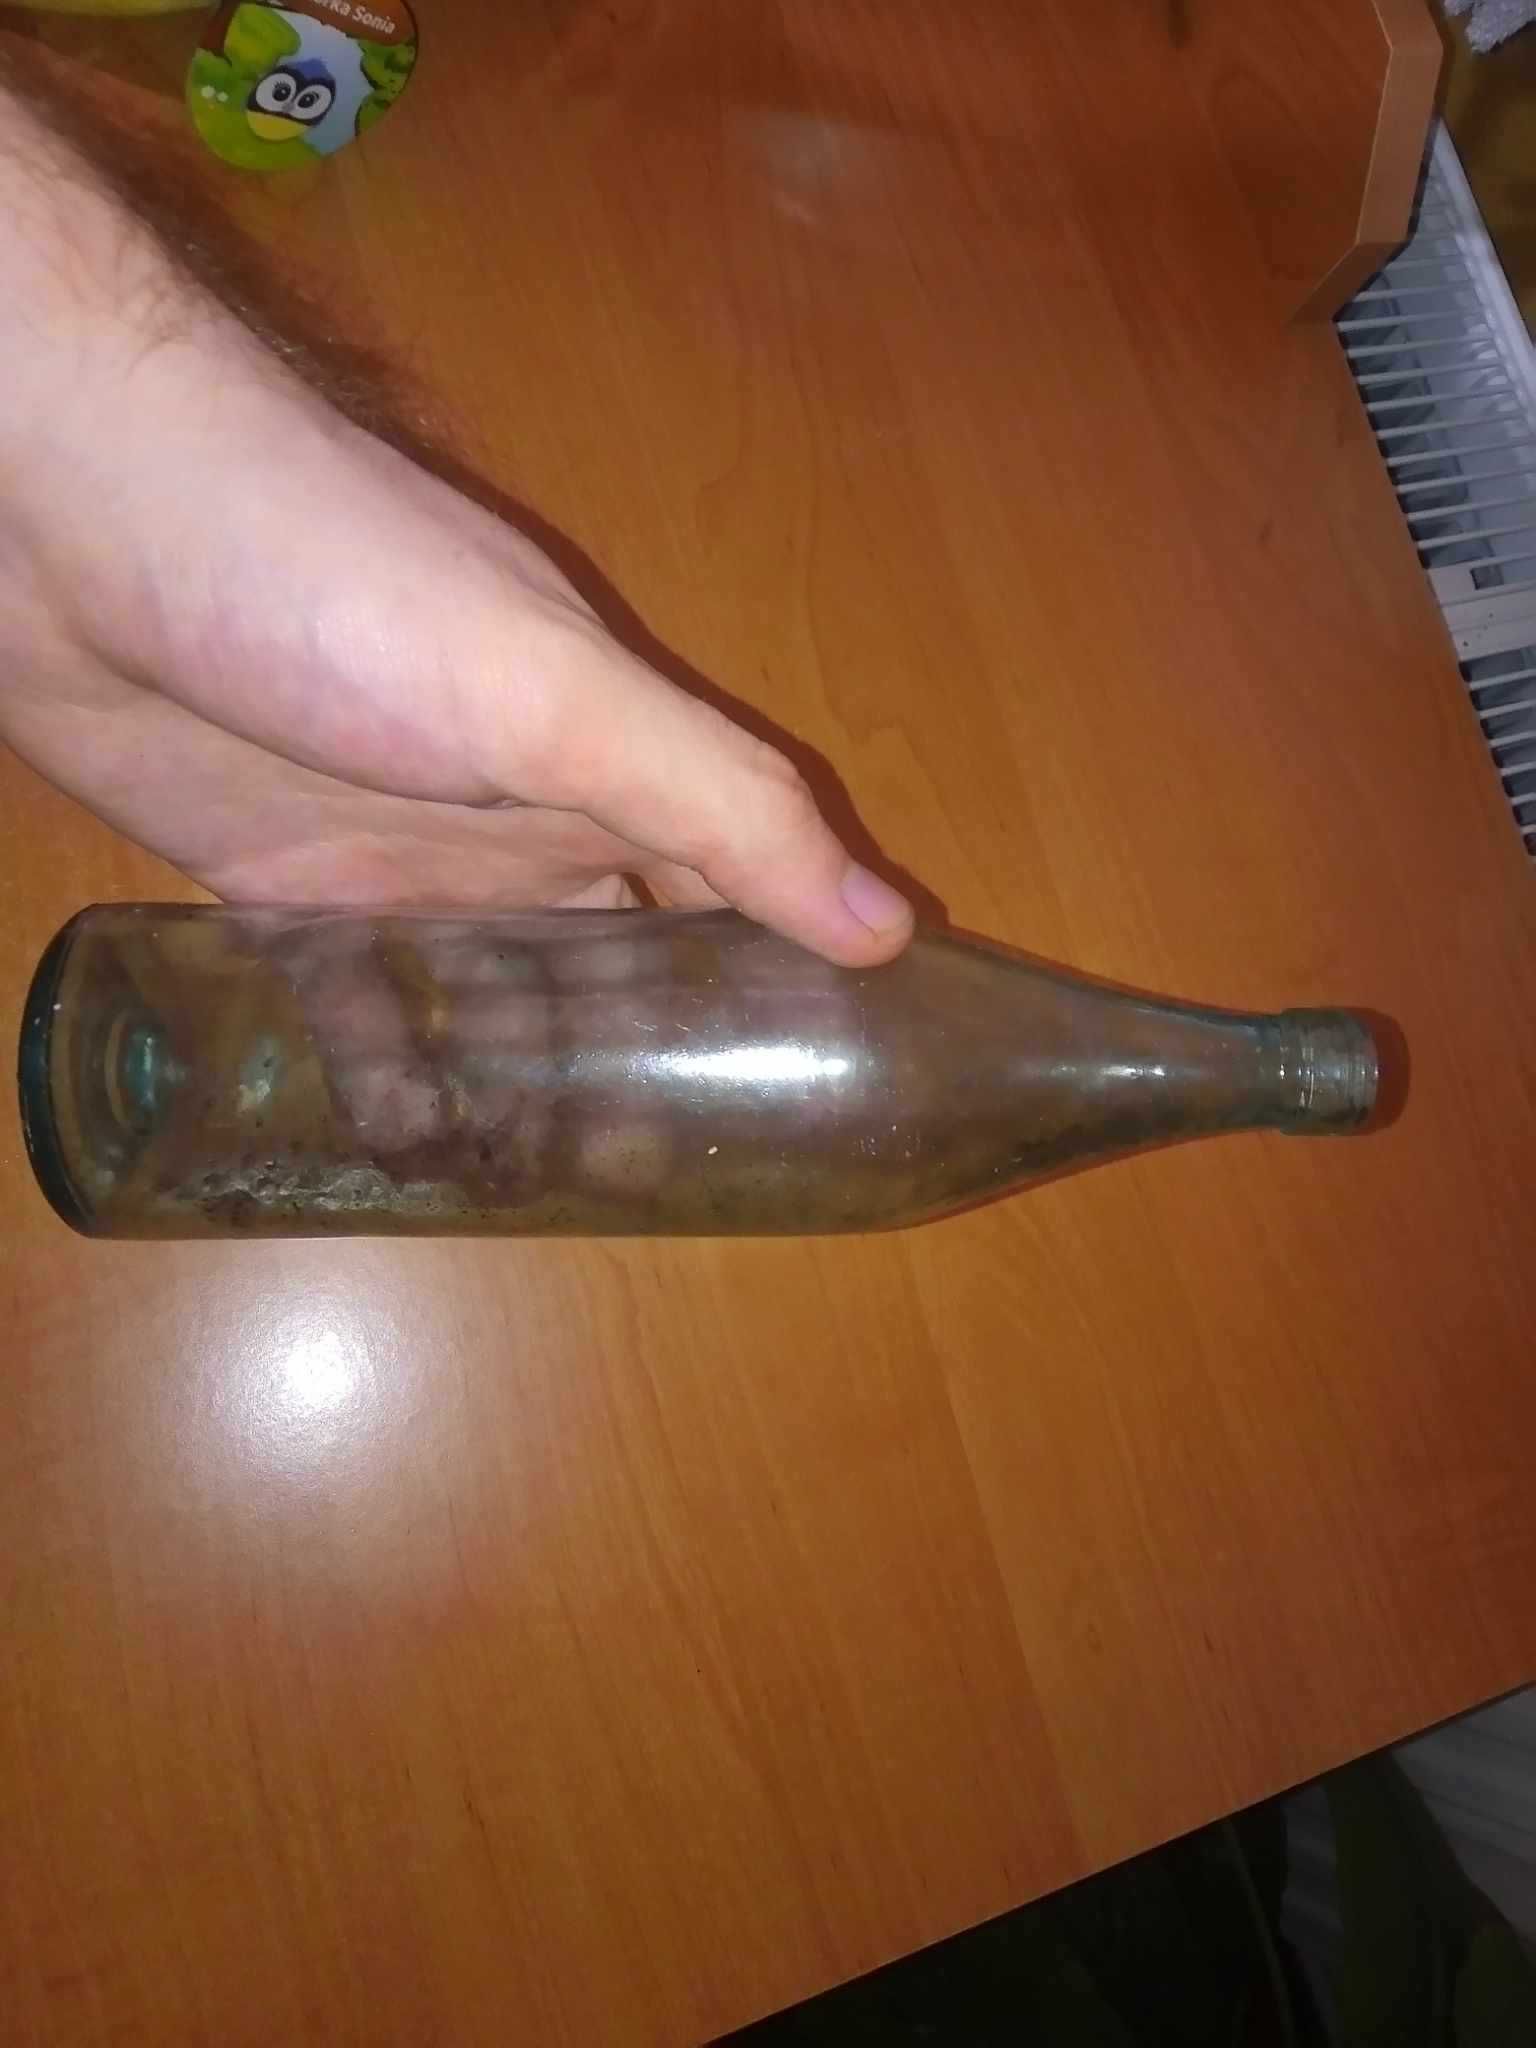 Butelka szklana pusta niebieska miętowa szkło denaturat stara PRL